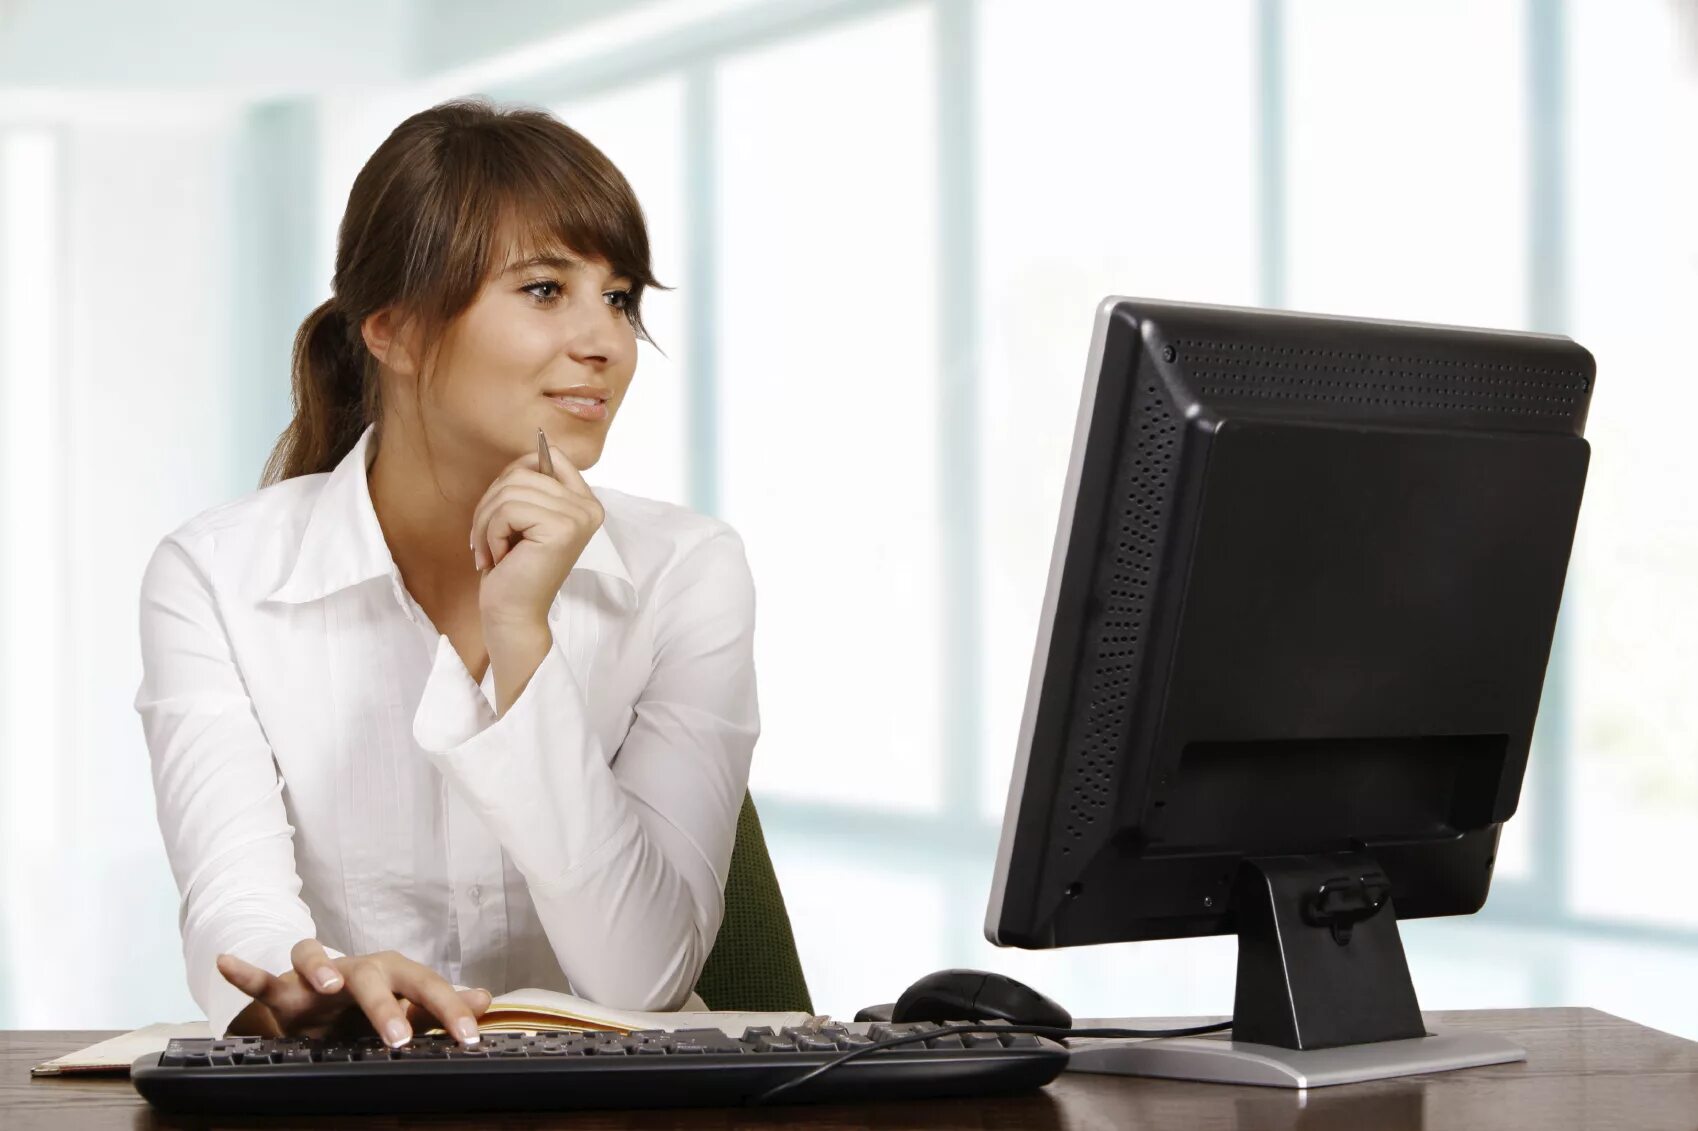 Картинка женщина на работе. Человек в офисе за компьютером. Женщина в офисе. Человек перед монитором. Женщина работает за компьютером.